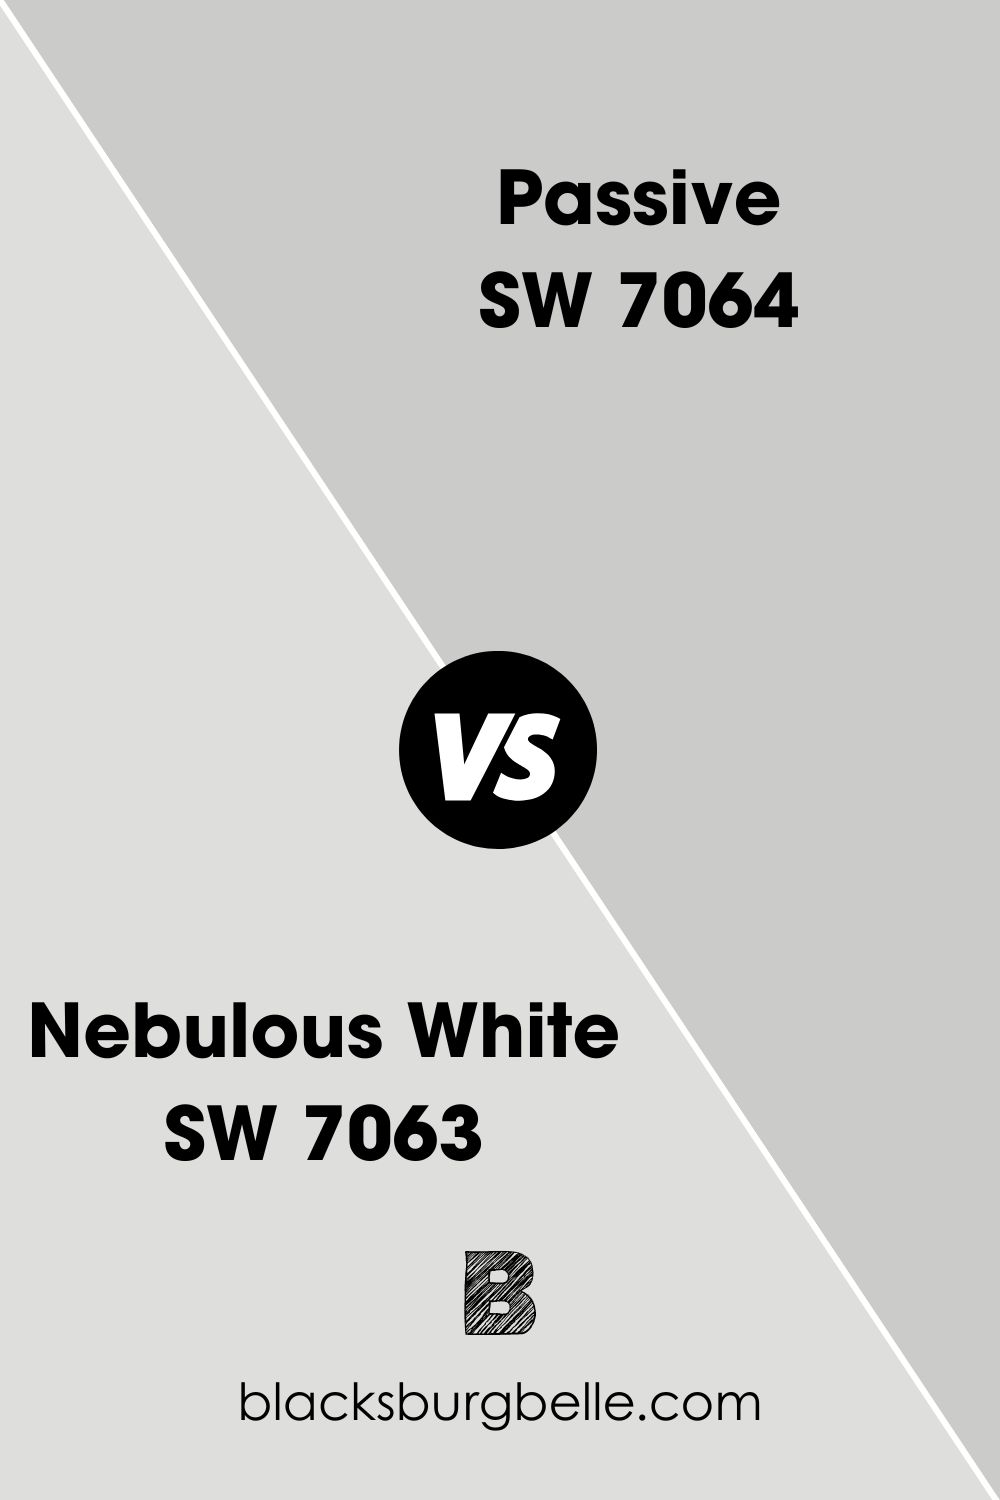 Nebulous White SW 7063